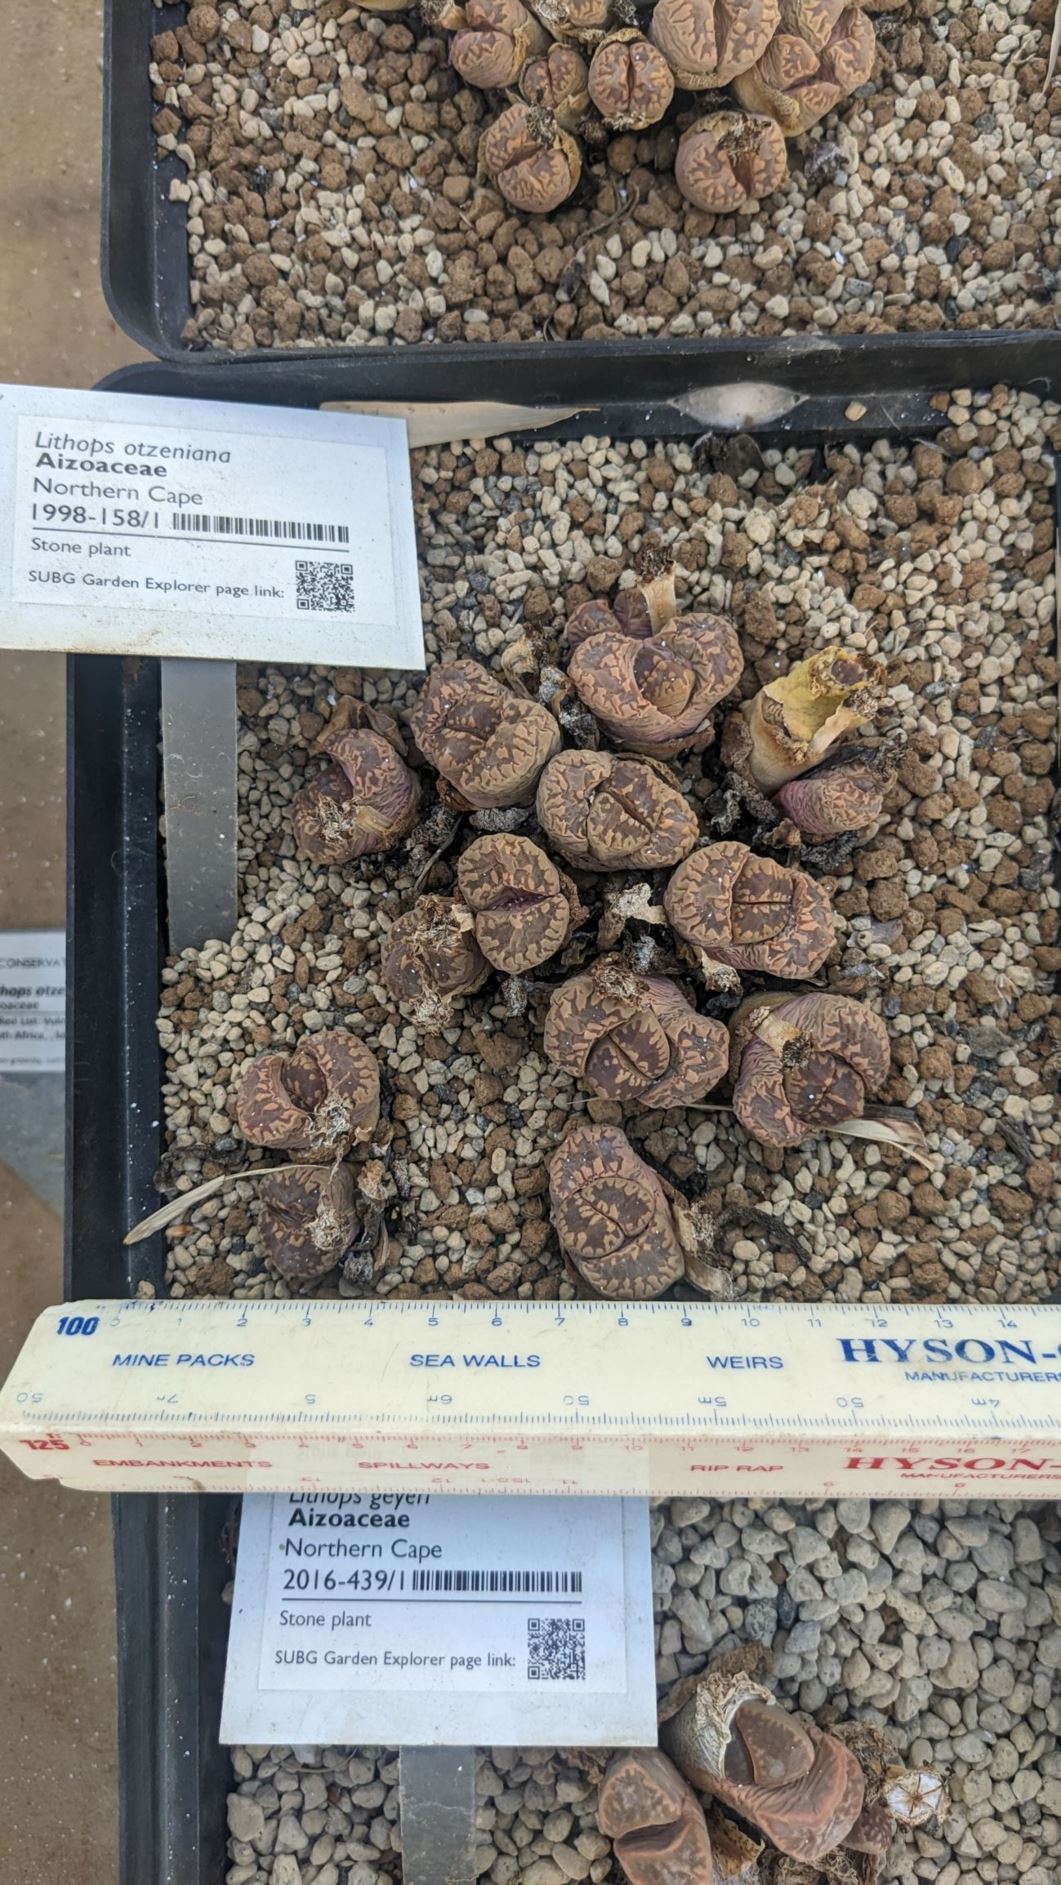 Lithops otzeniana - Beeskloutjies, Stone plant